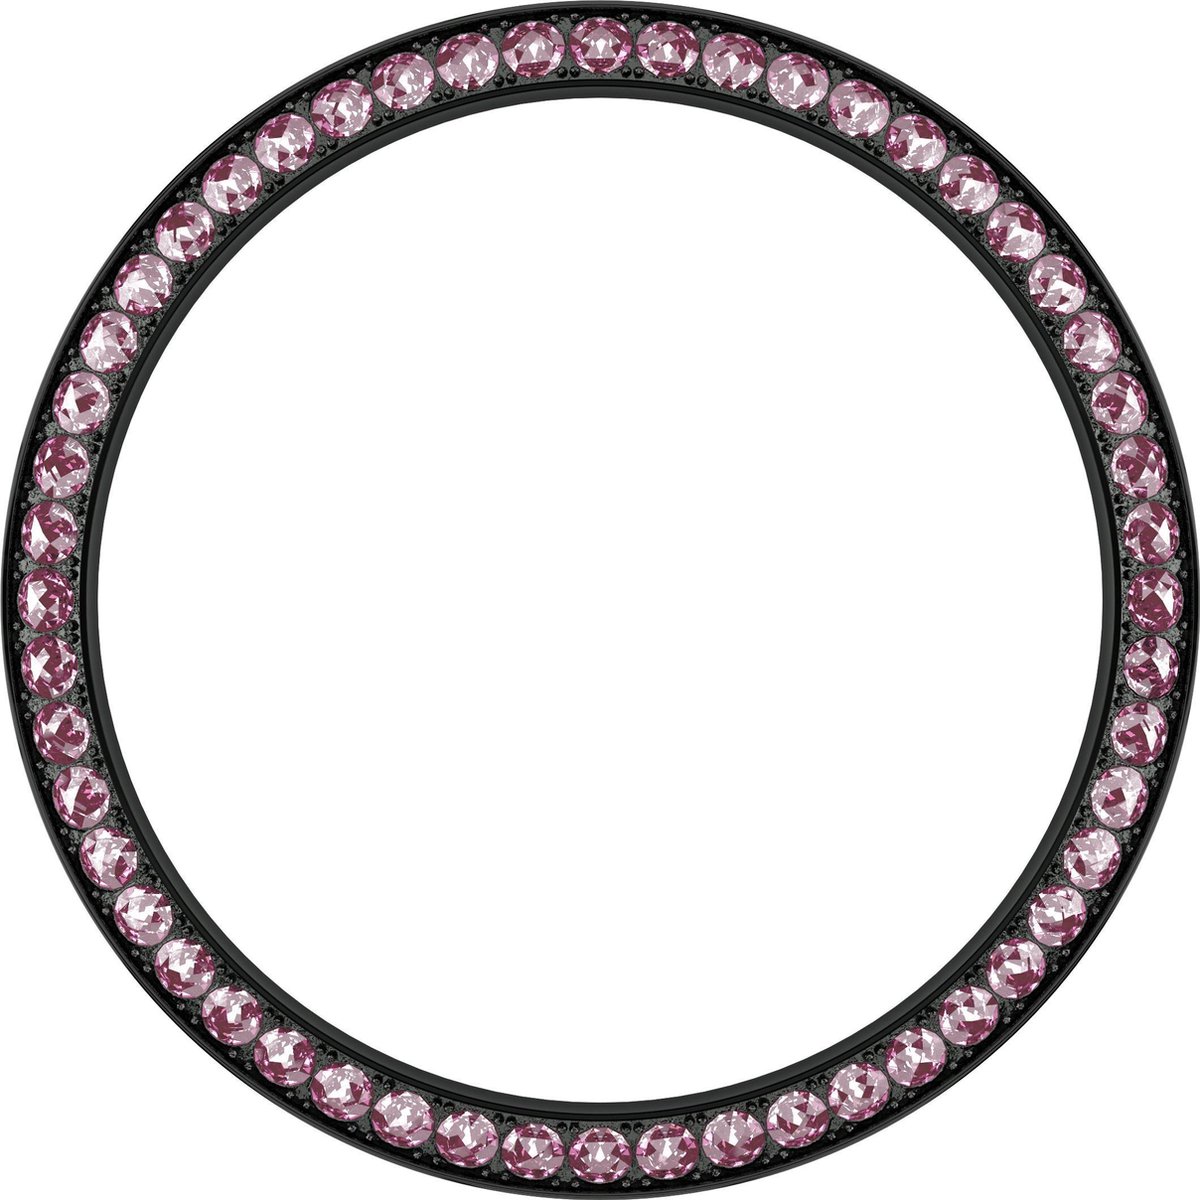 Marc Coblen 42 mm black bezel - pink stones